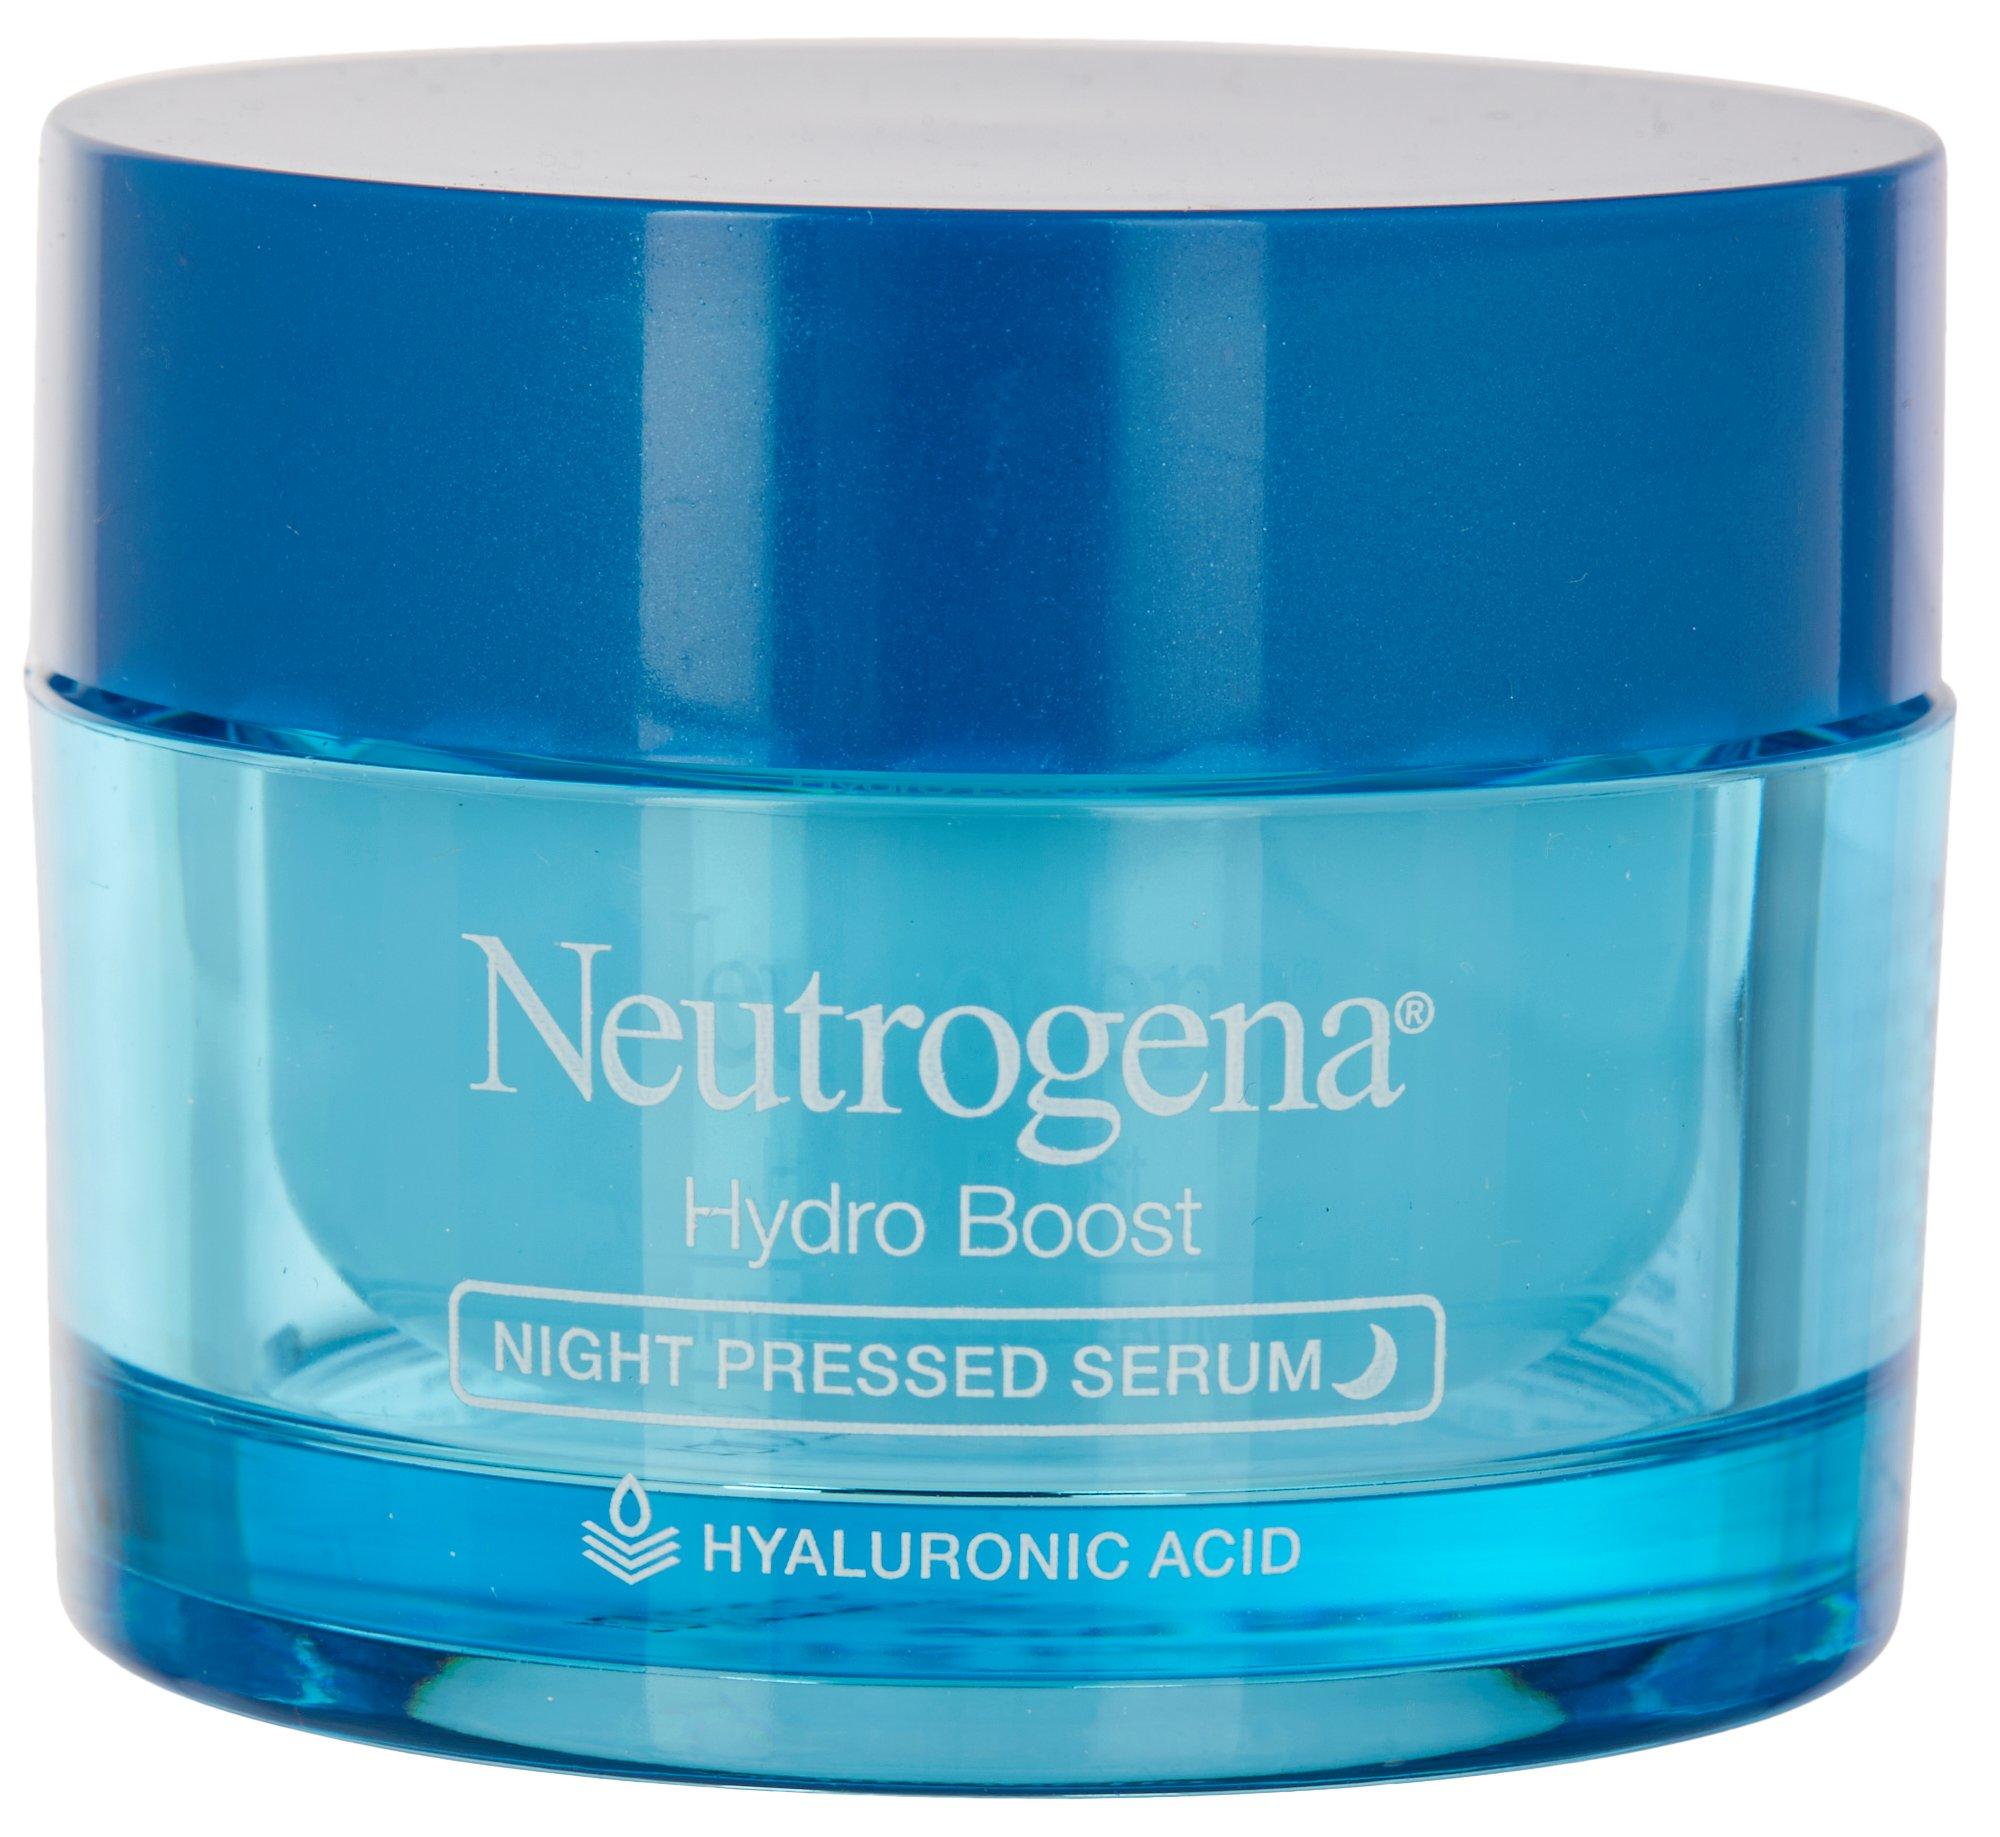 Neutrogena 1.7 oz. Hydro Boost Night Pressed Serum